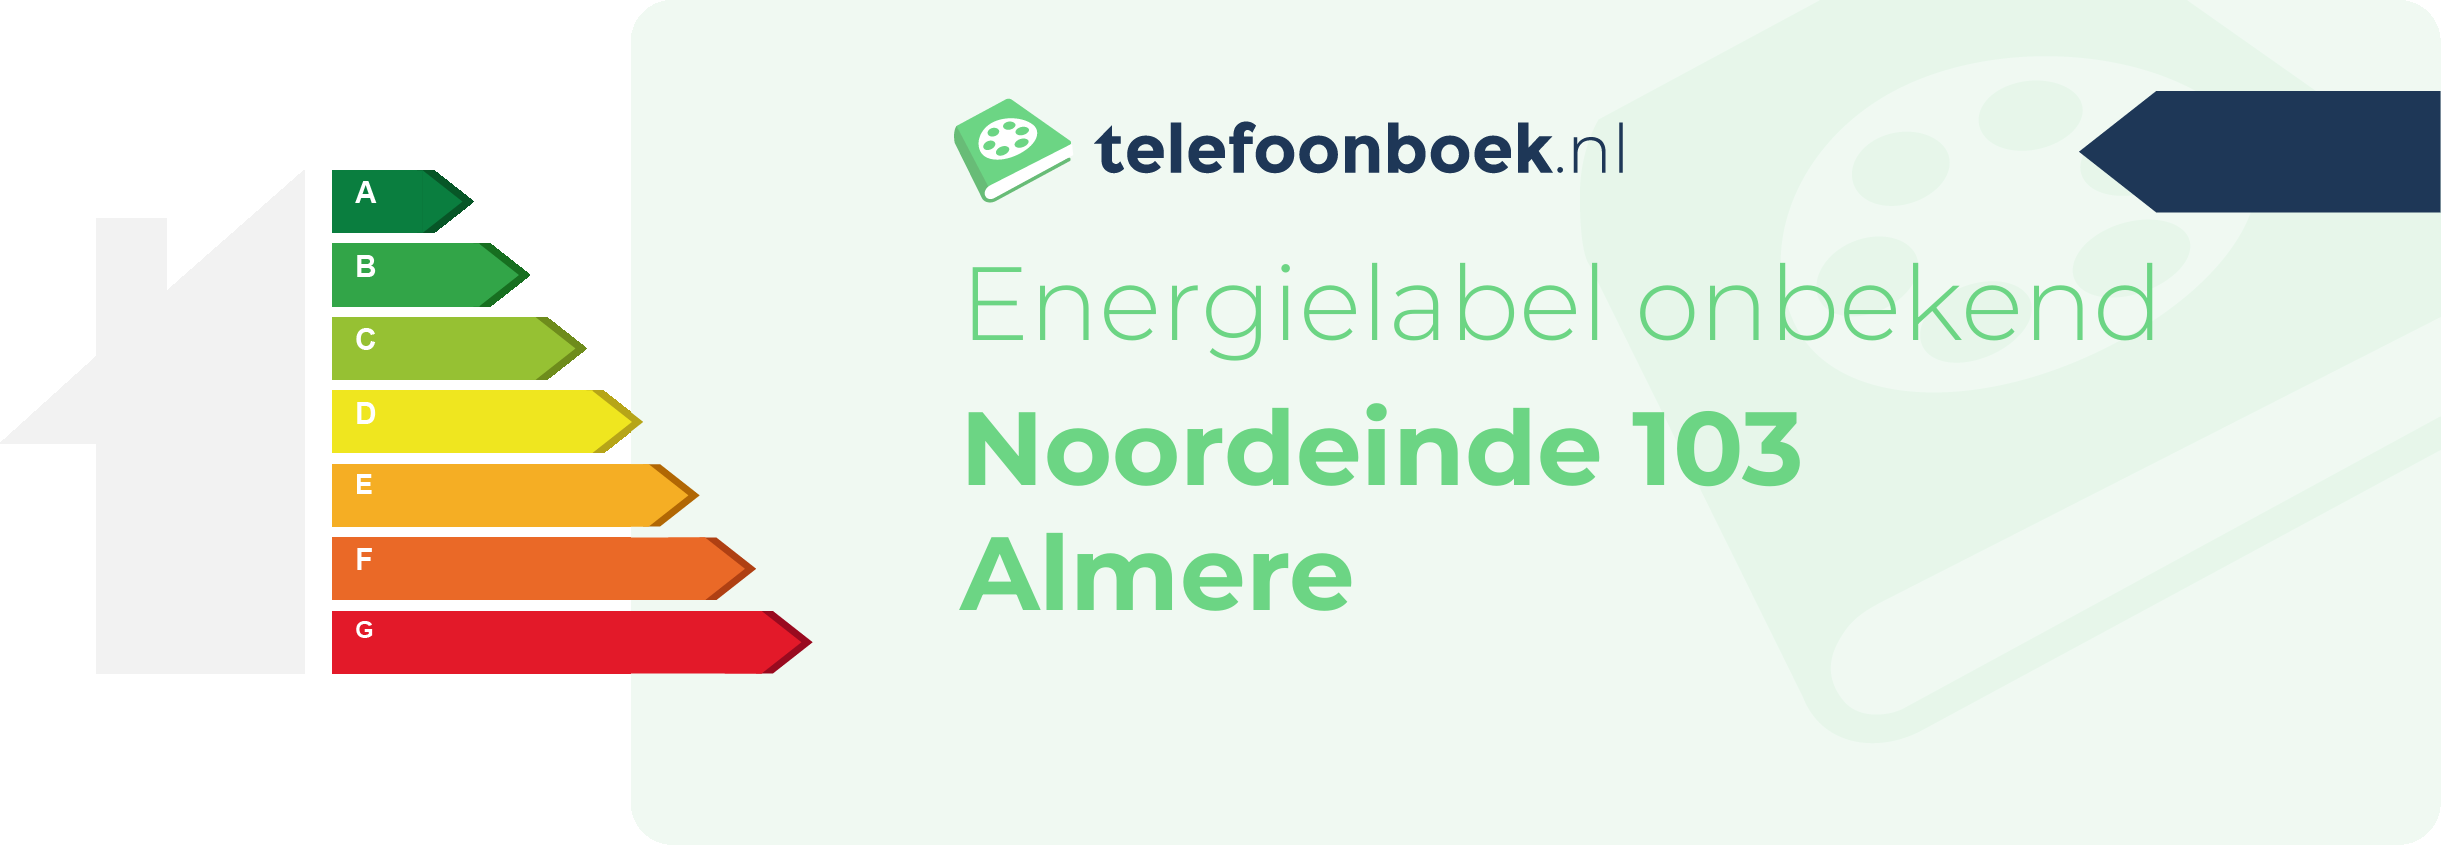 Energielabel Noordeinde 103 Almere